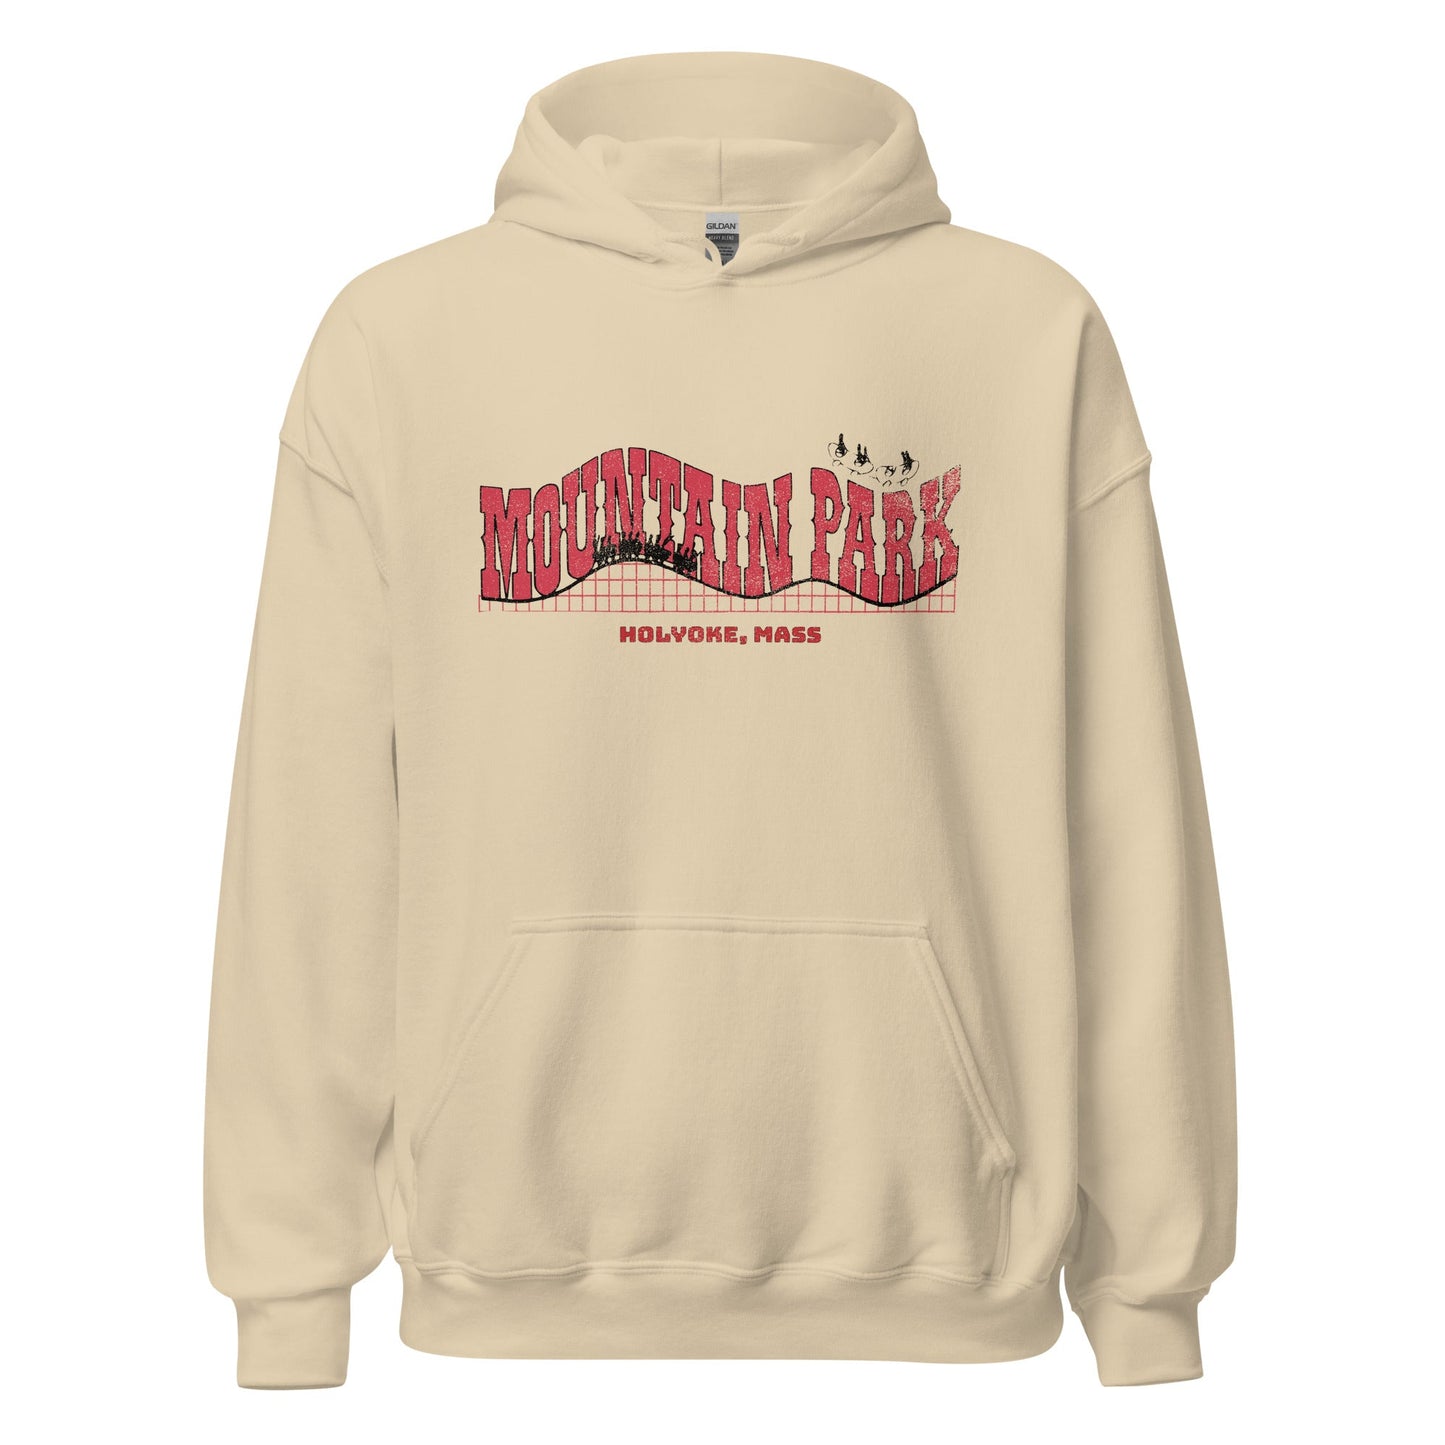 Mountain Park Hoodie - Holyoke, MA - Vintage Amusement Park Sweatshirt